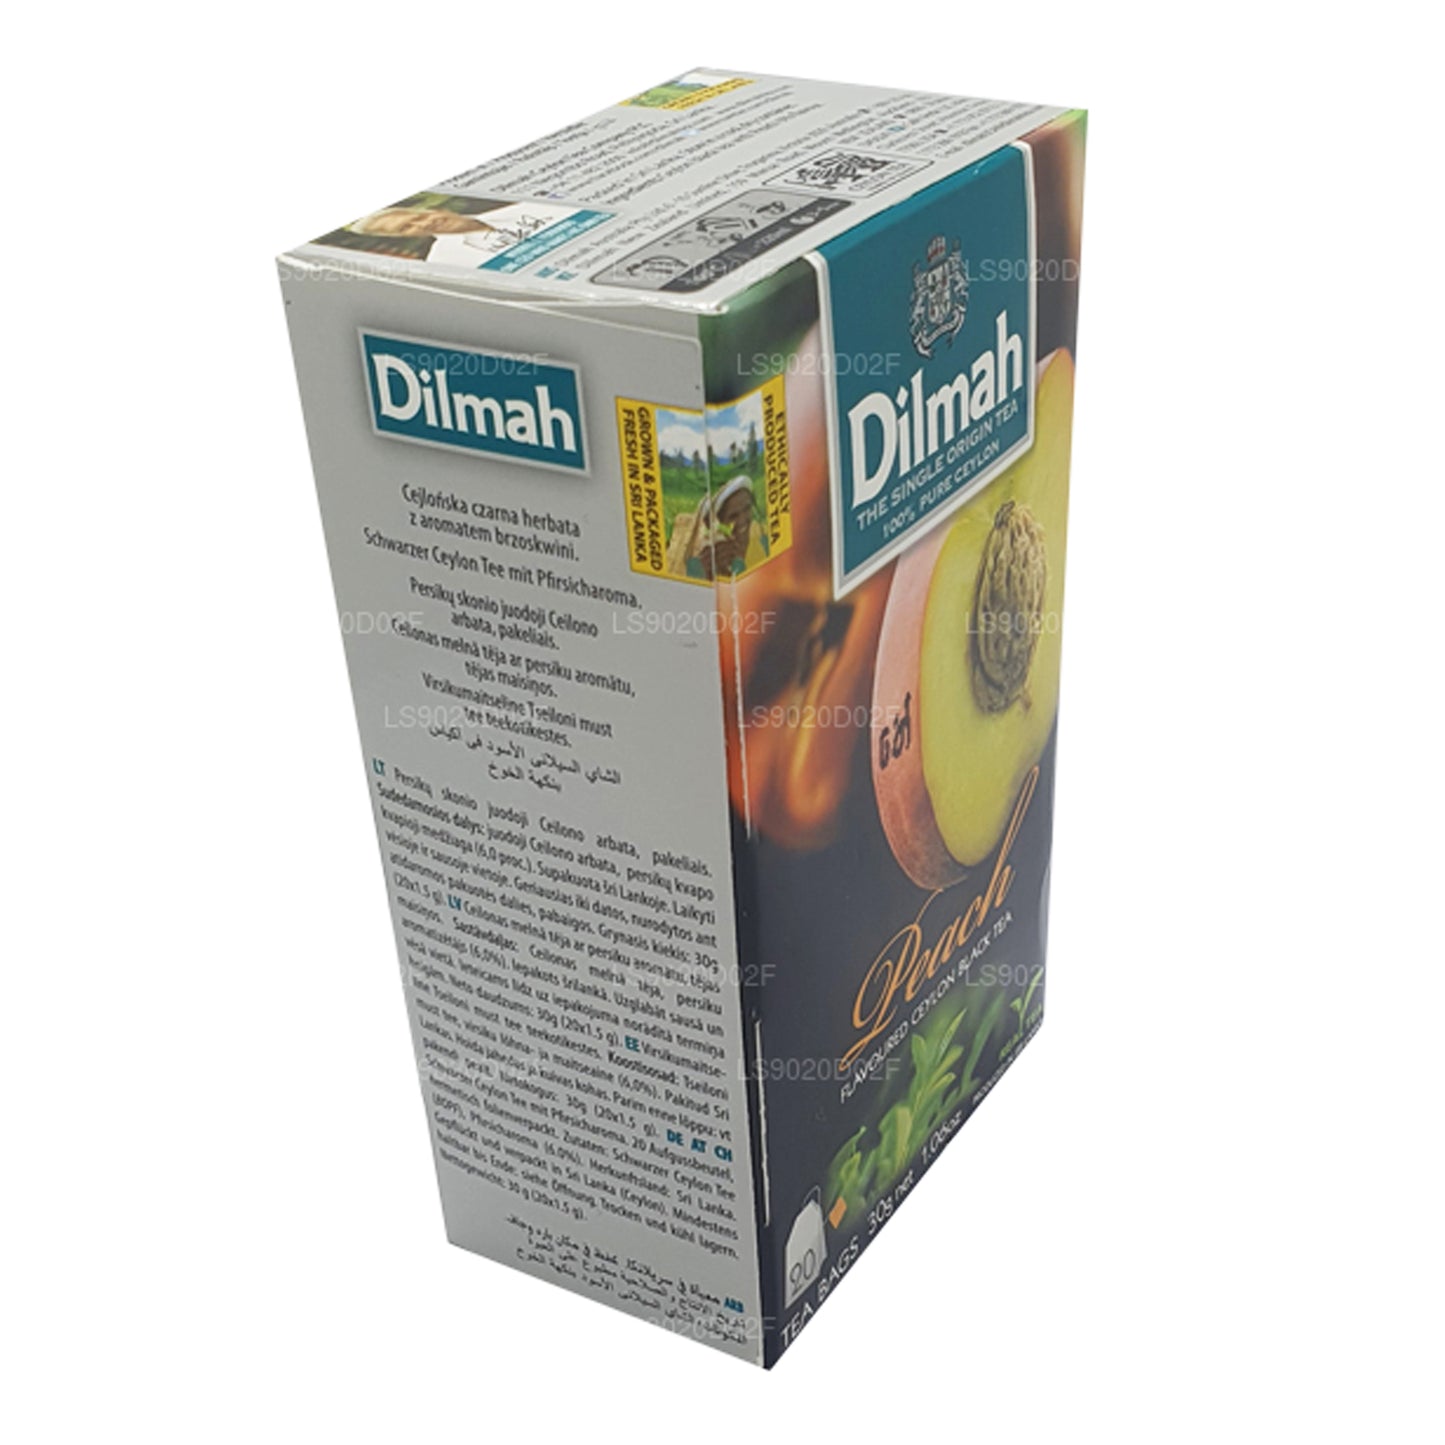 Dilmah 桃味锡兰红茶 (30g) 20 茶包